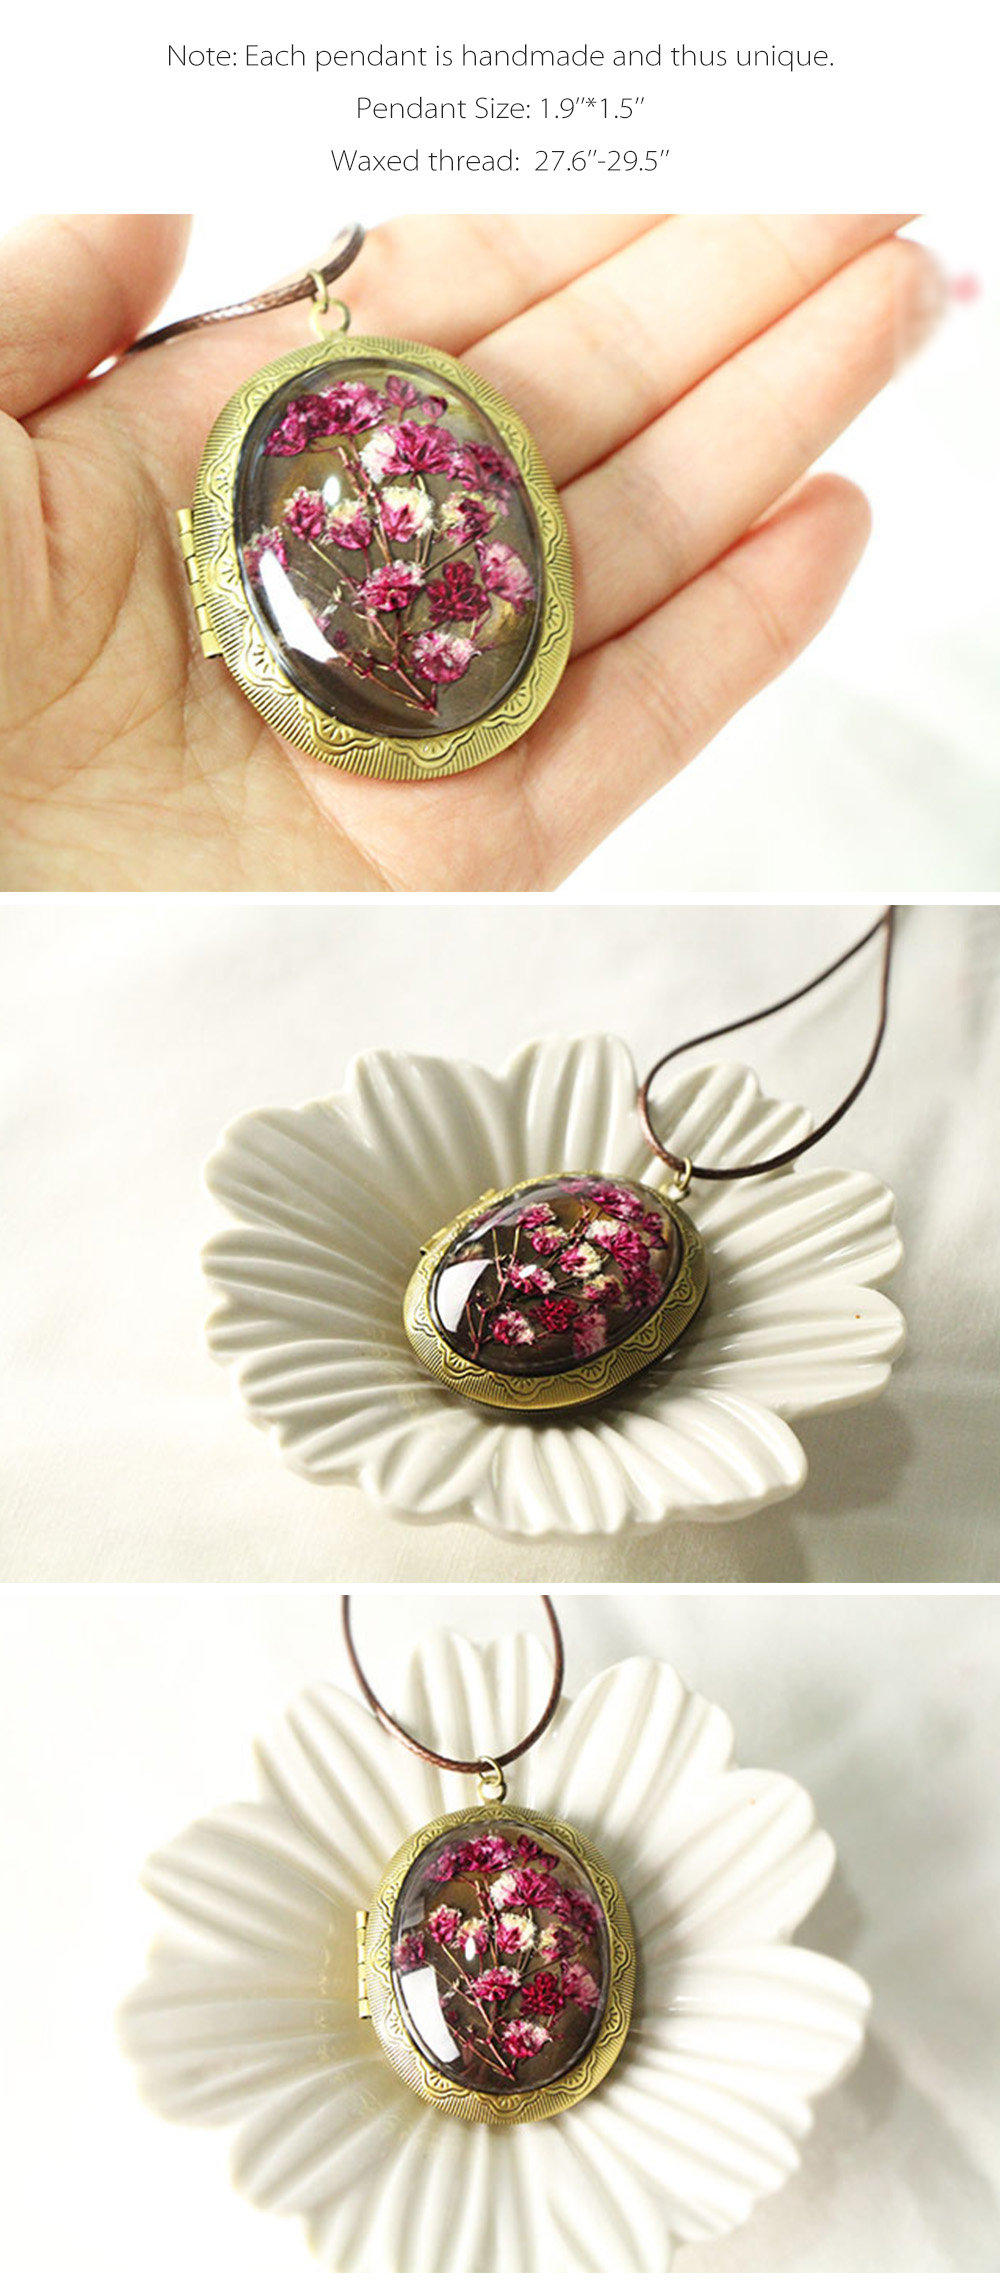  YOOE Natural Dried Flower Locket Necklace. True Flower